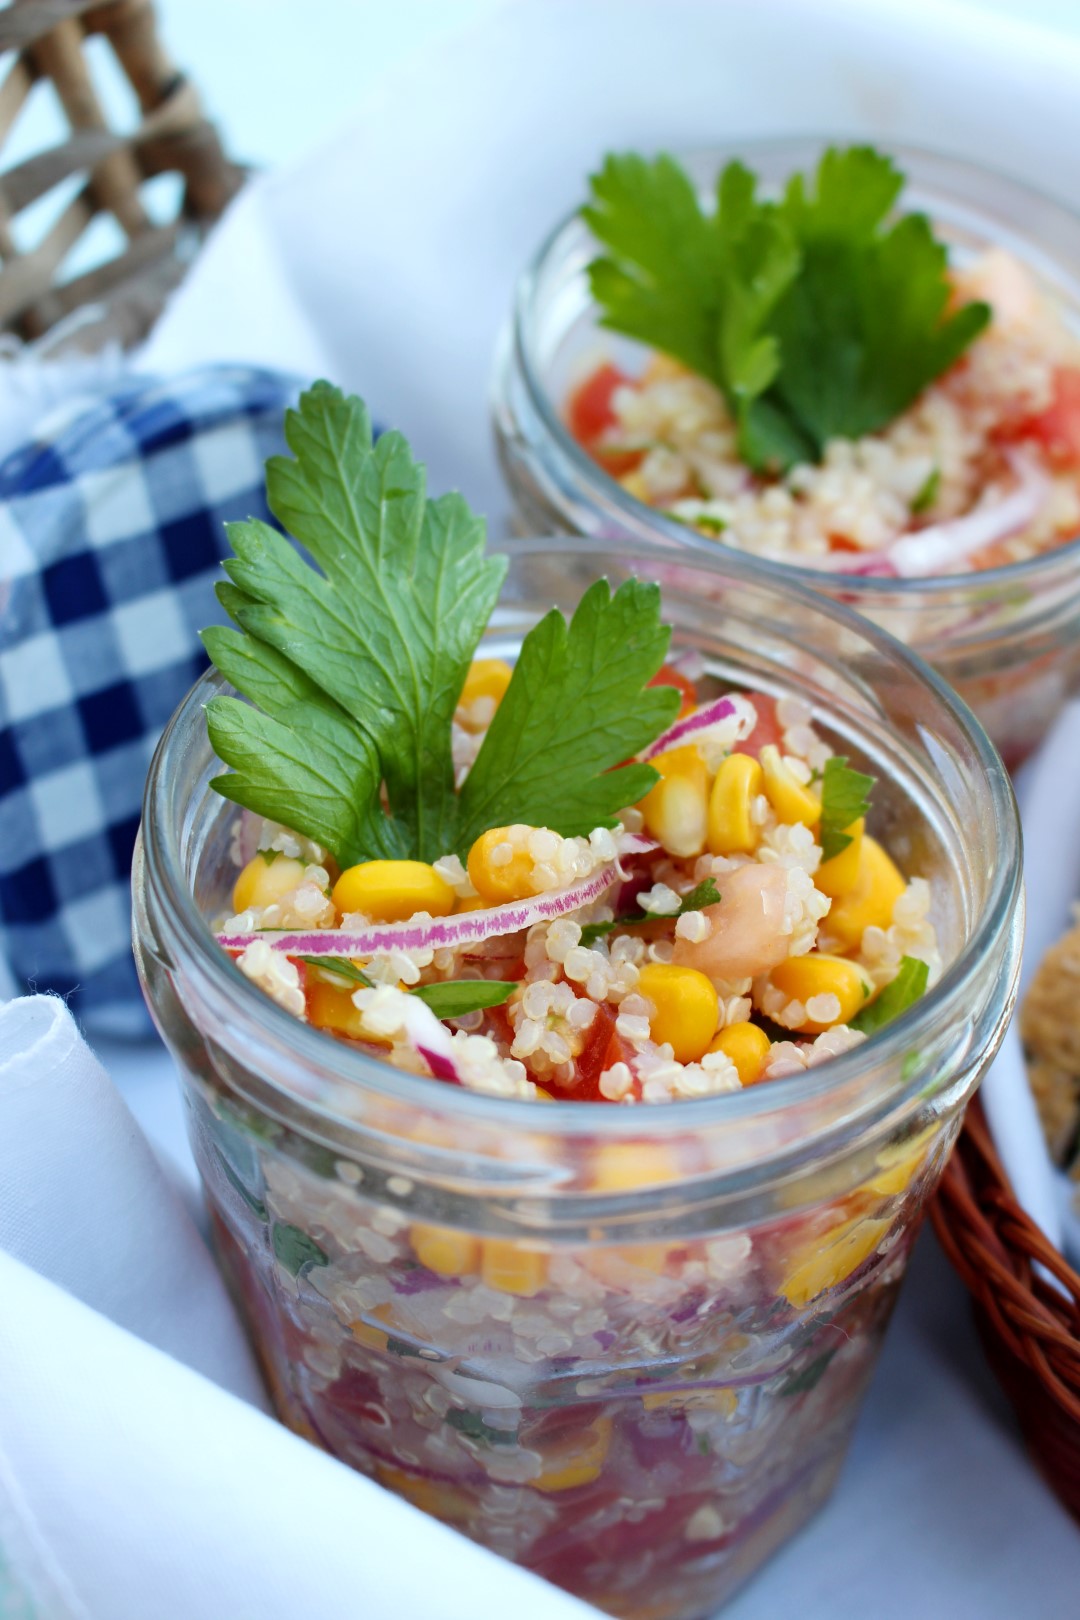 Ensalada de quinoa y vegetales, especial picnic